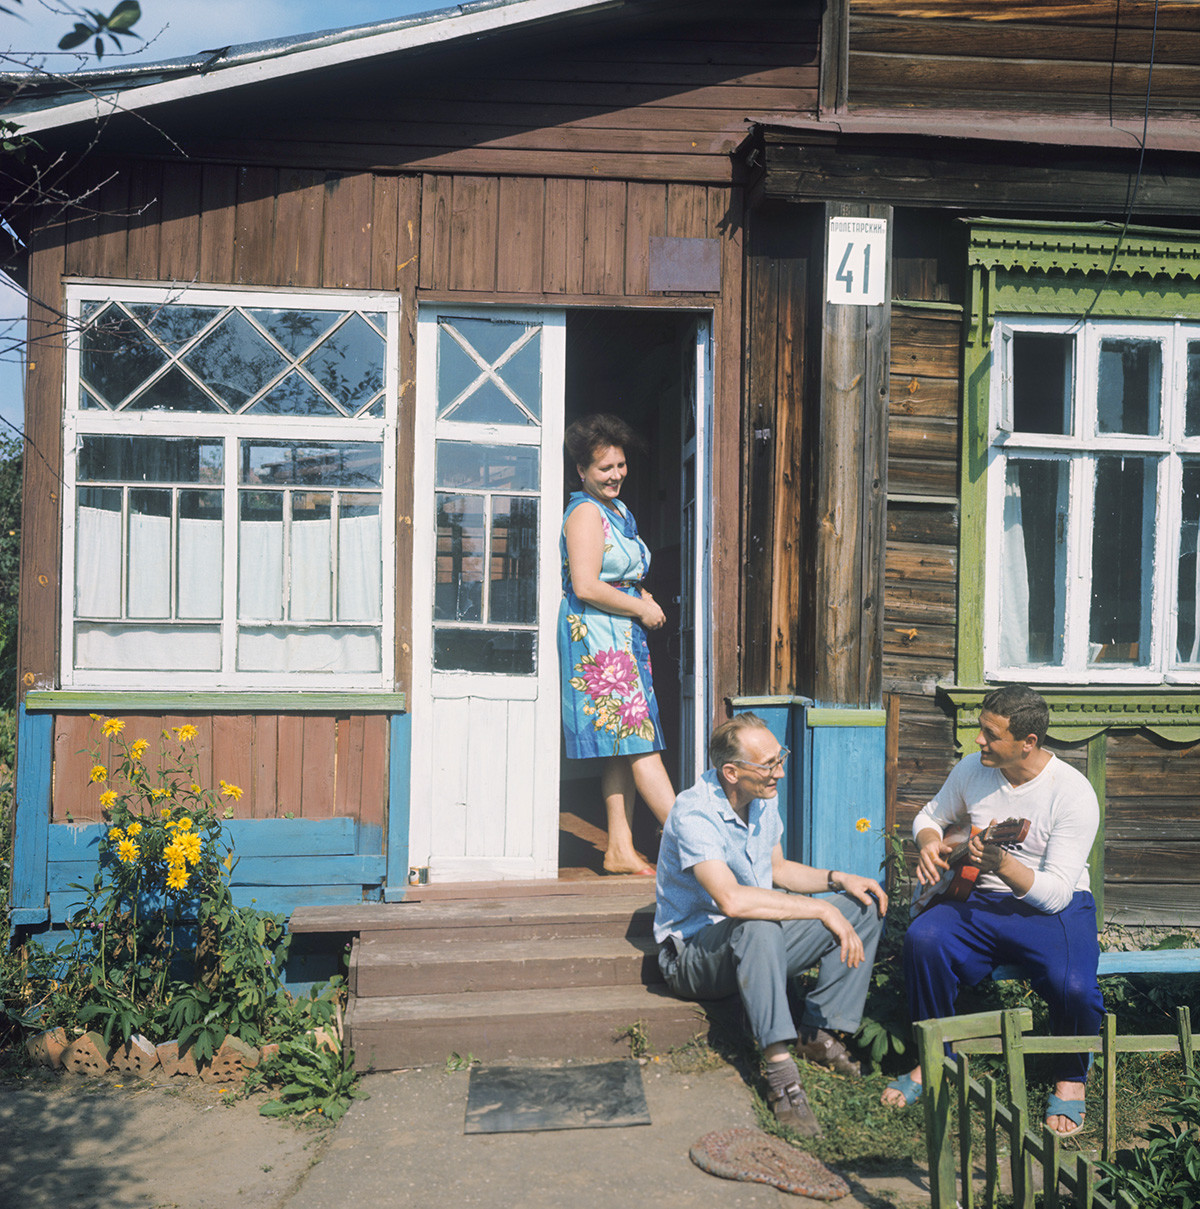 O cosmonauta soviético Vladislav Volkov na dátcha, com a mulher e o sogro.